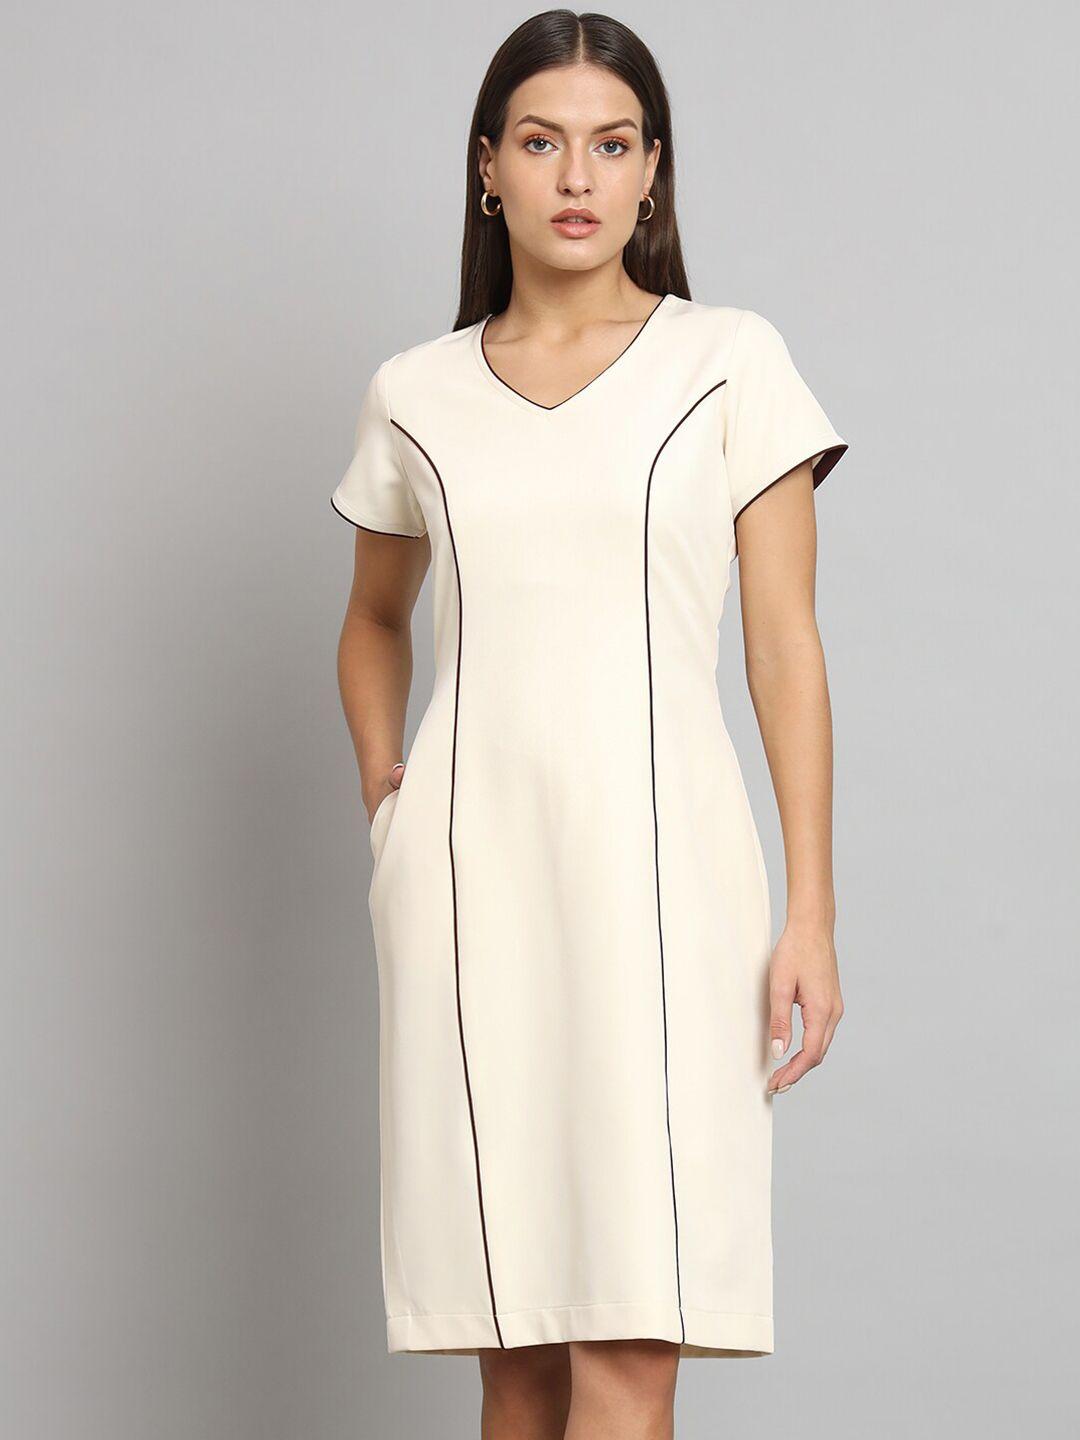 powersutra v-neck short sleeves a-line dress